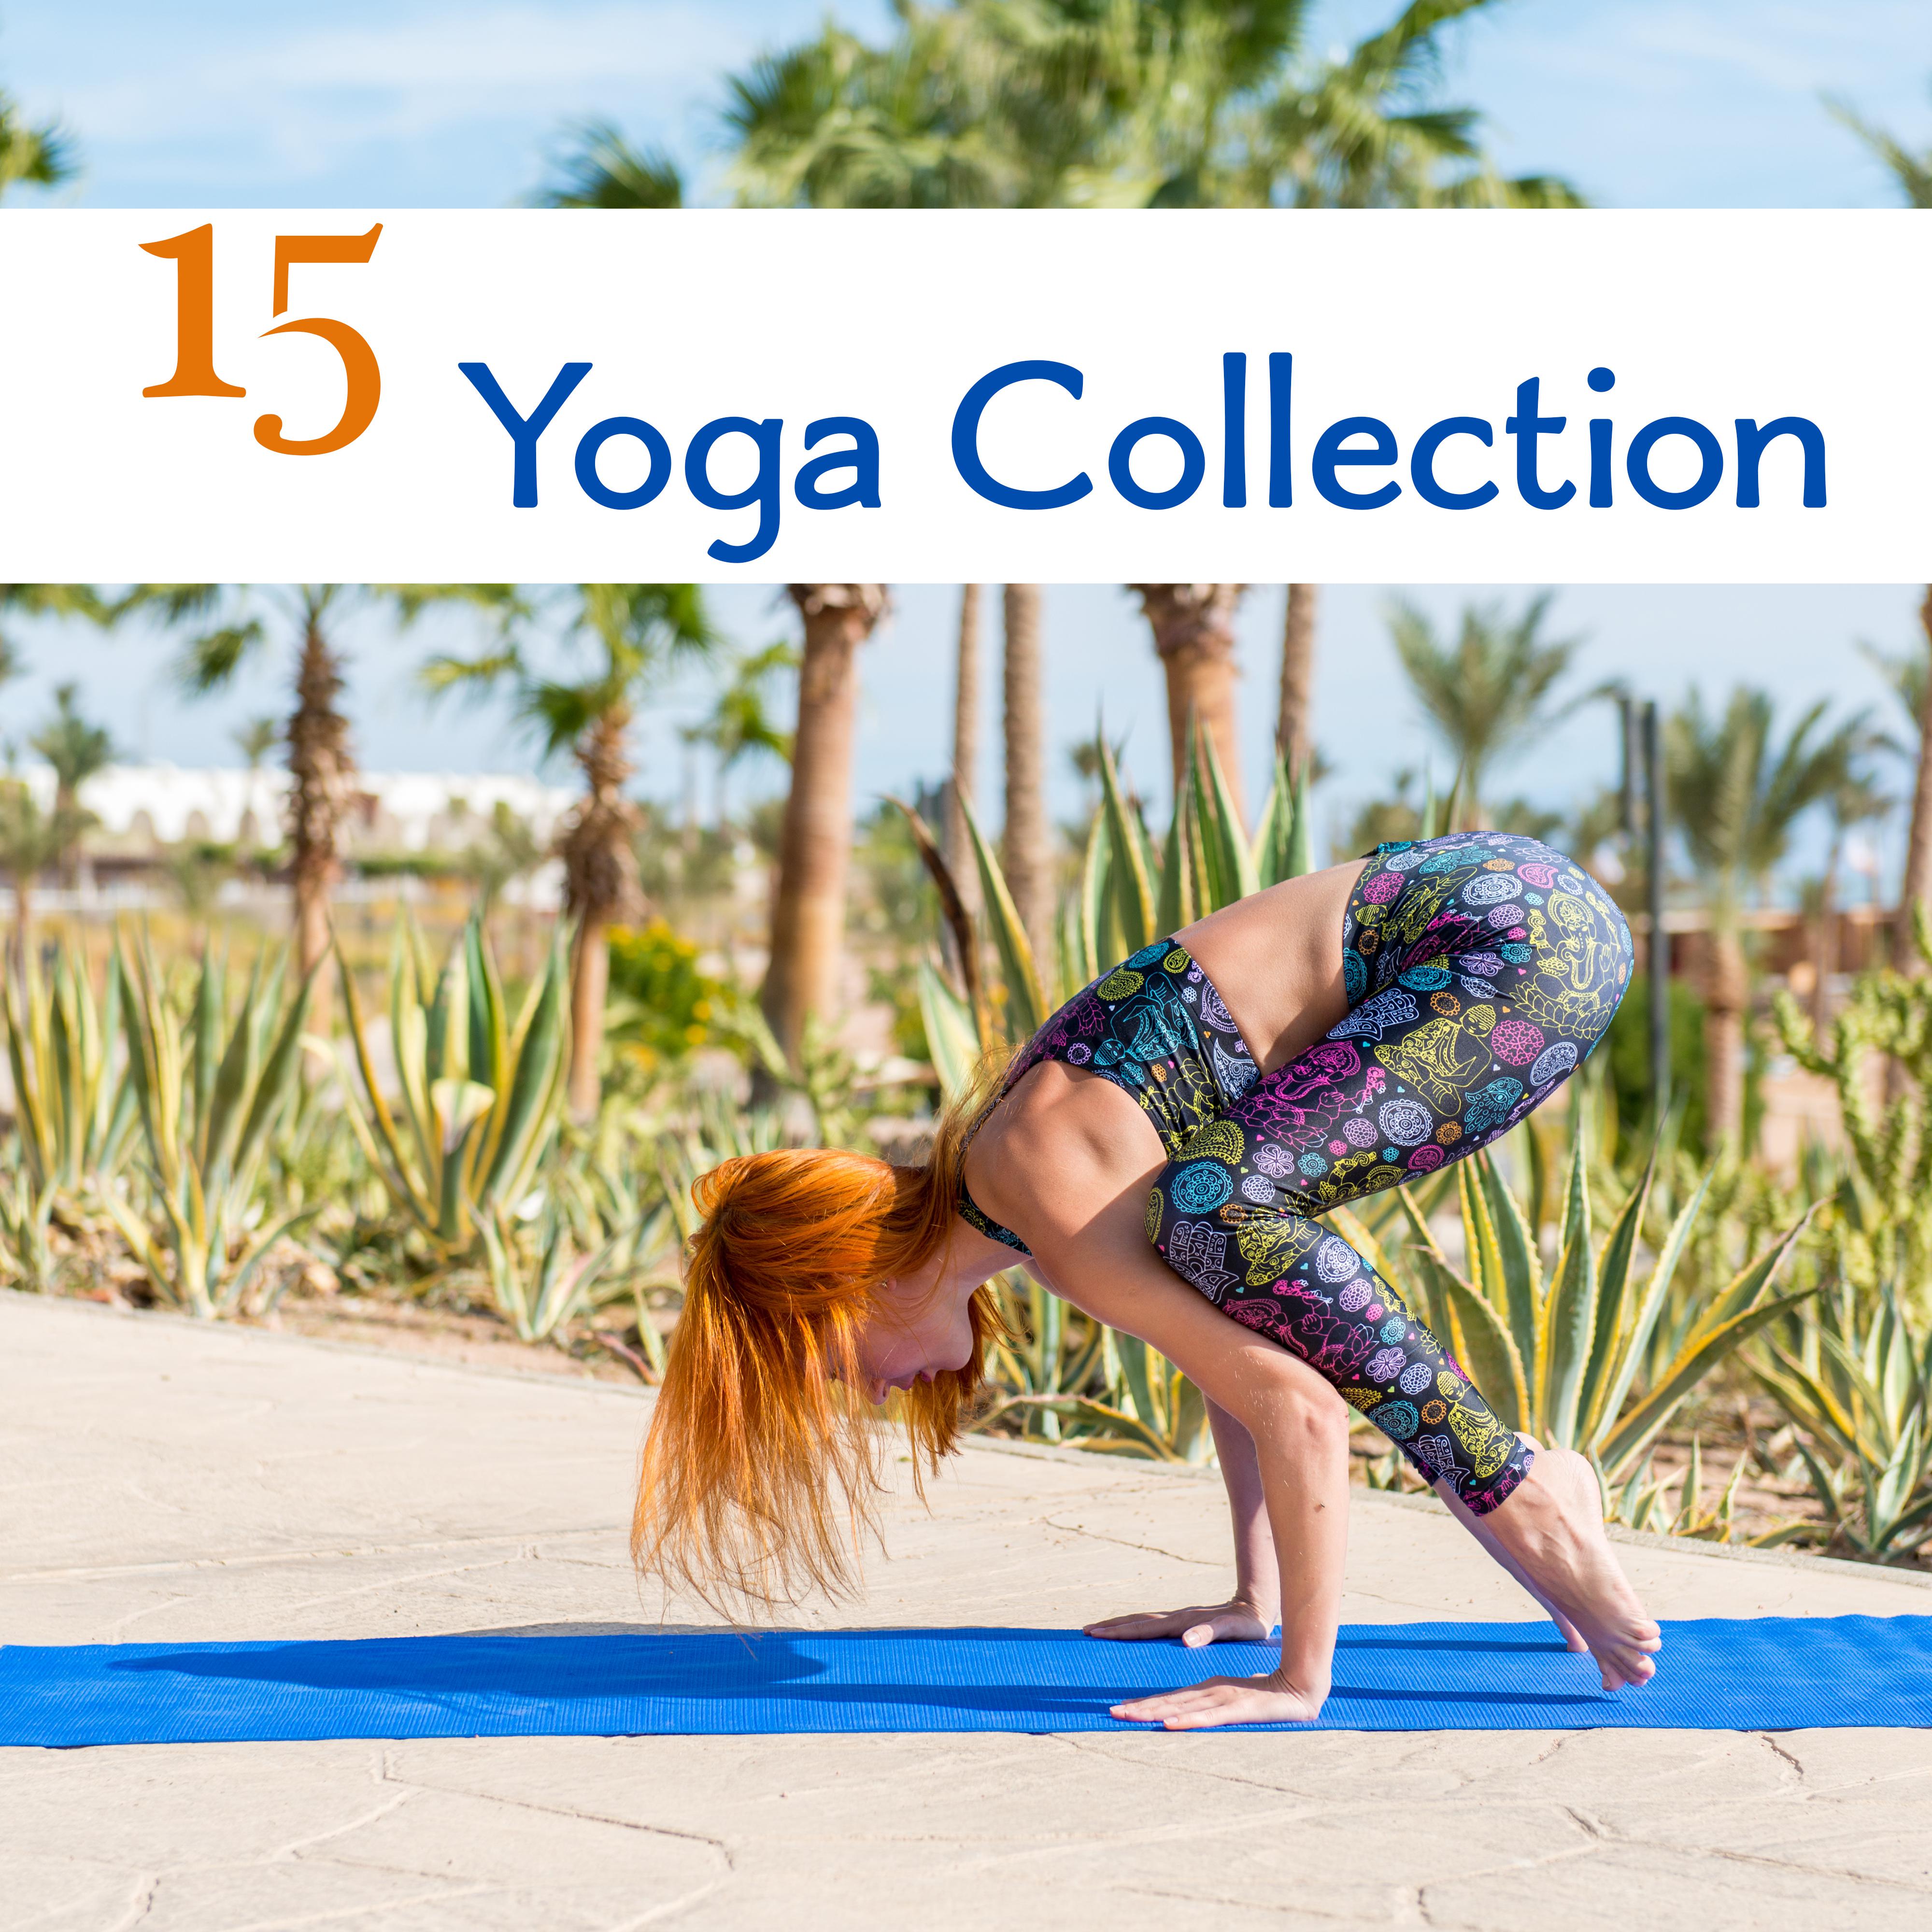 15 Yoga Collection